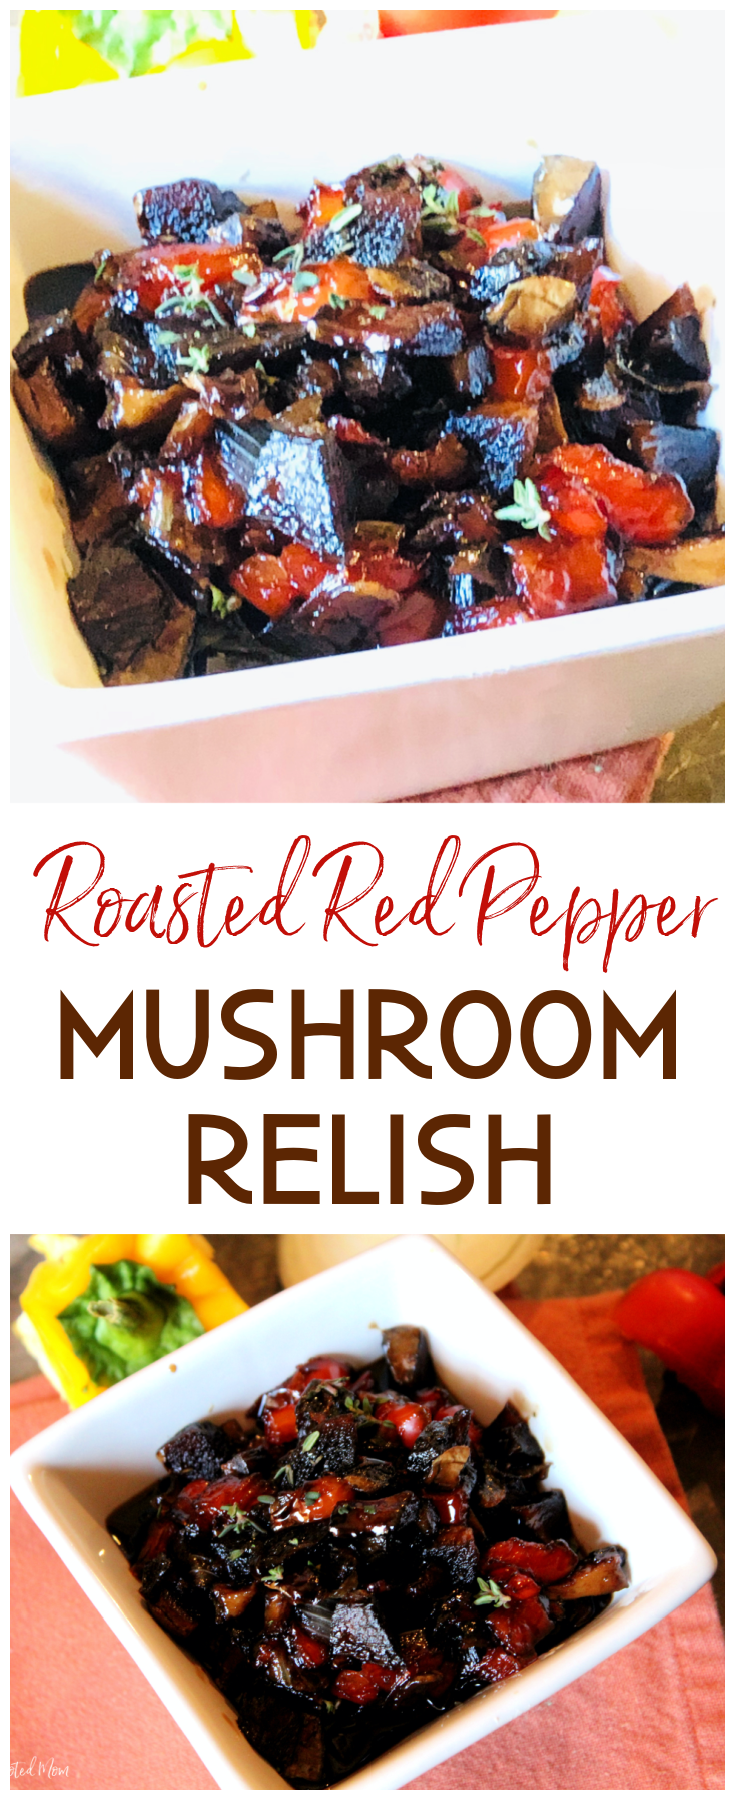 Roasted Red Pepper Mushroom Relish